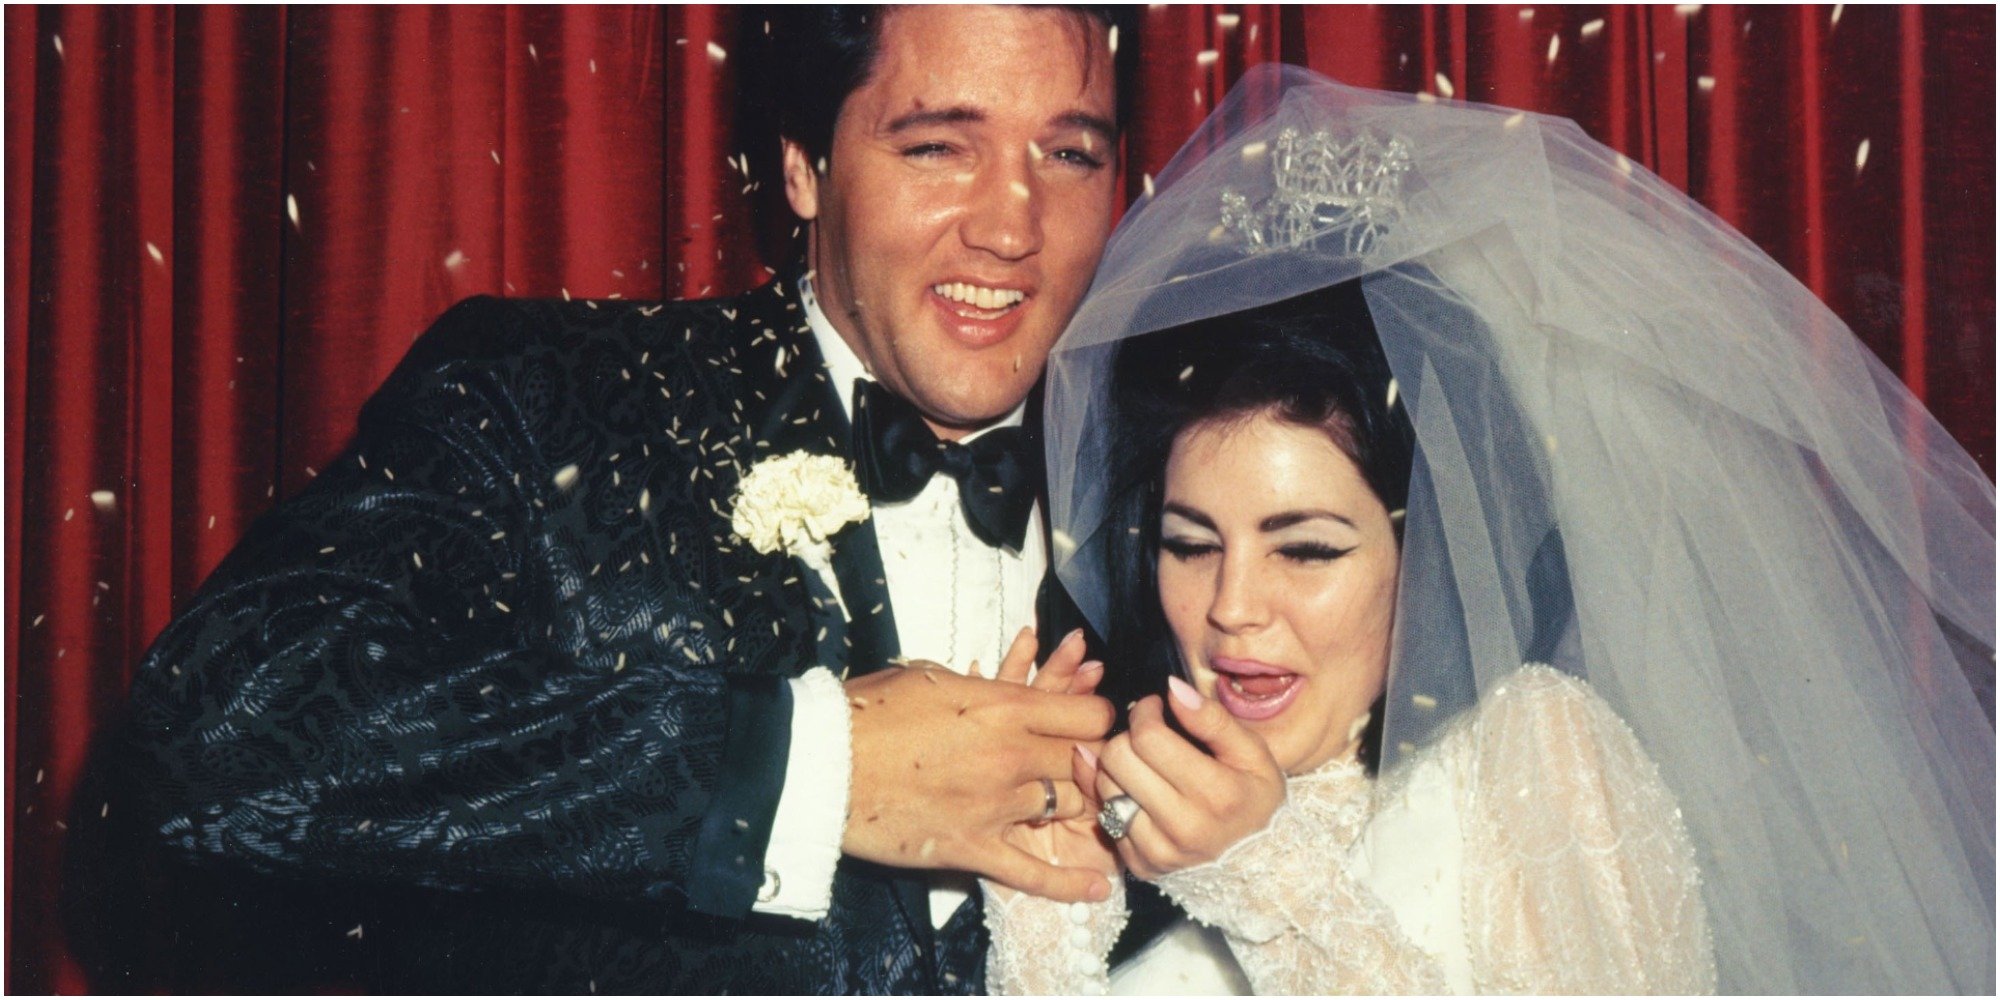 Elvis and Priscilla Presley on their 1967 wedding day.